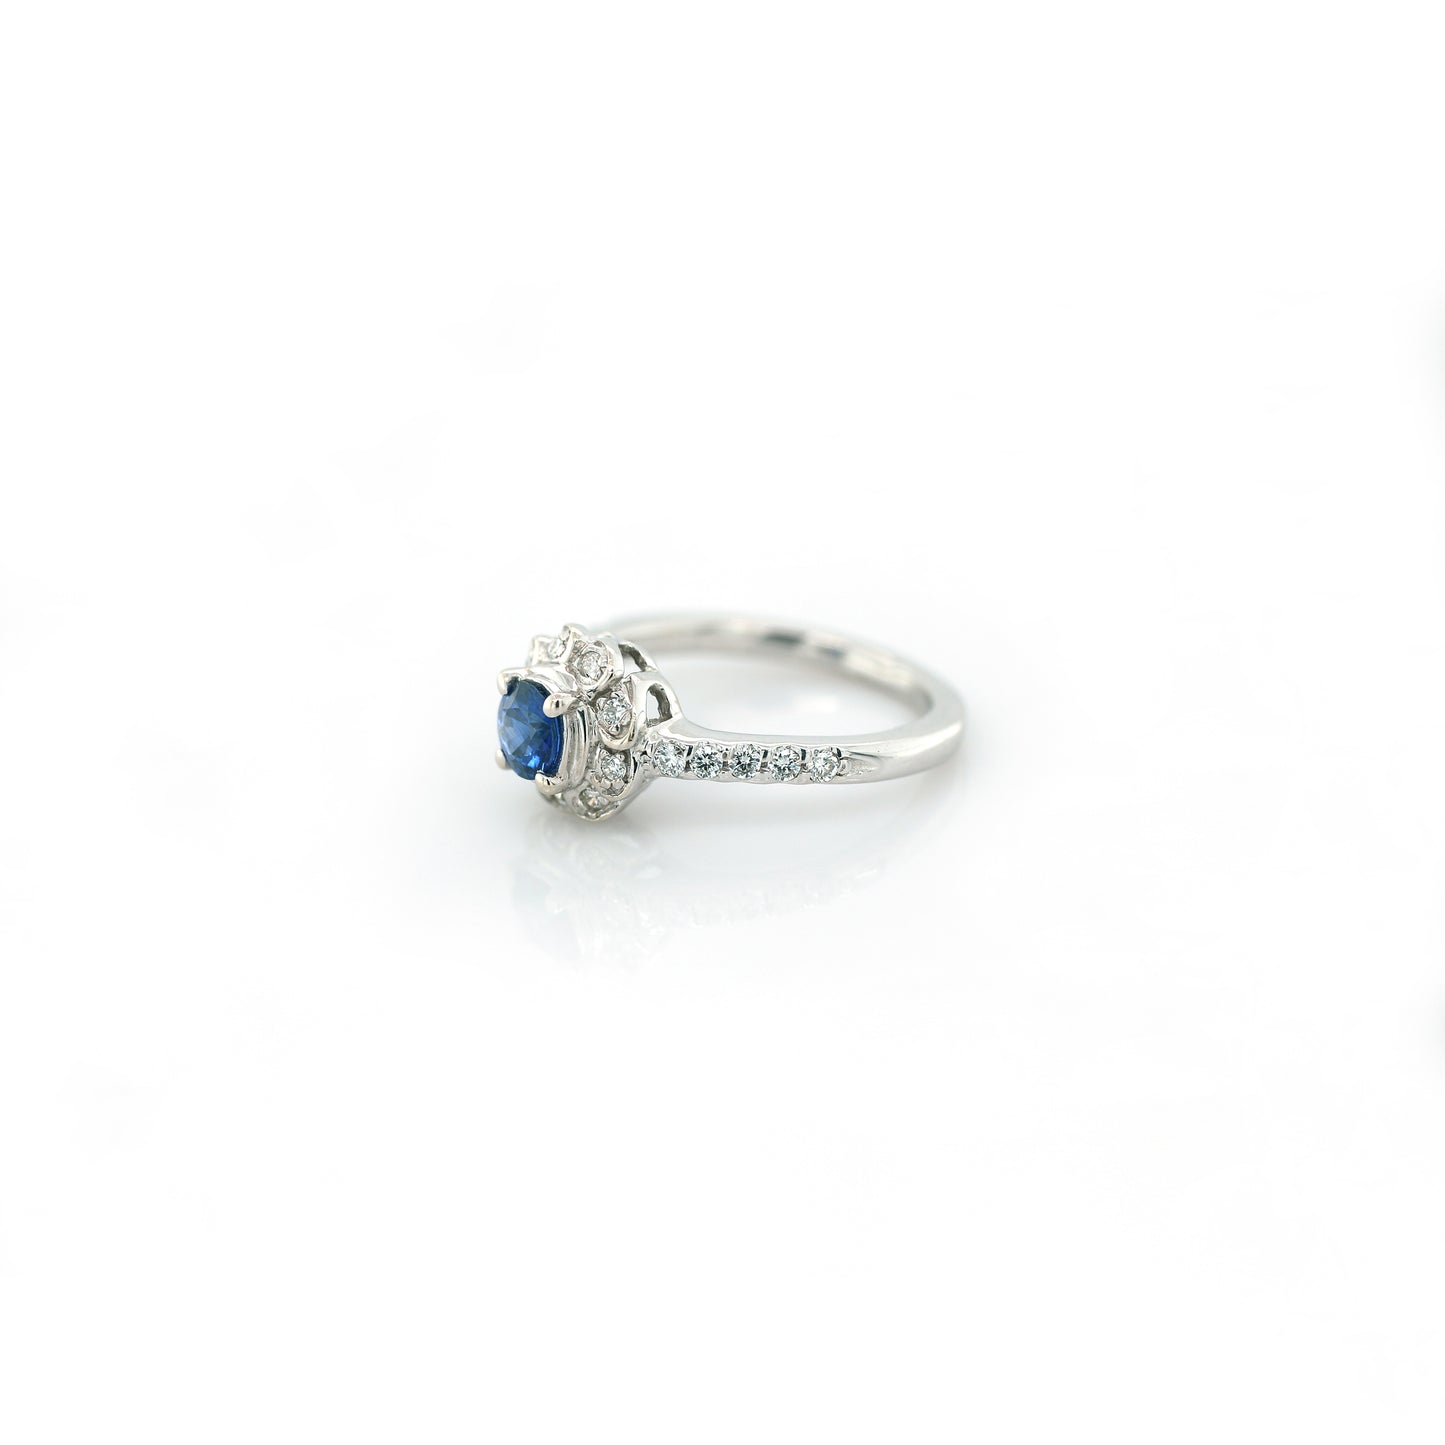 Blue Sapphire & Diamond Ring - 18K White Gold  3.67gm